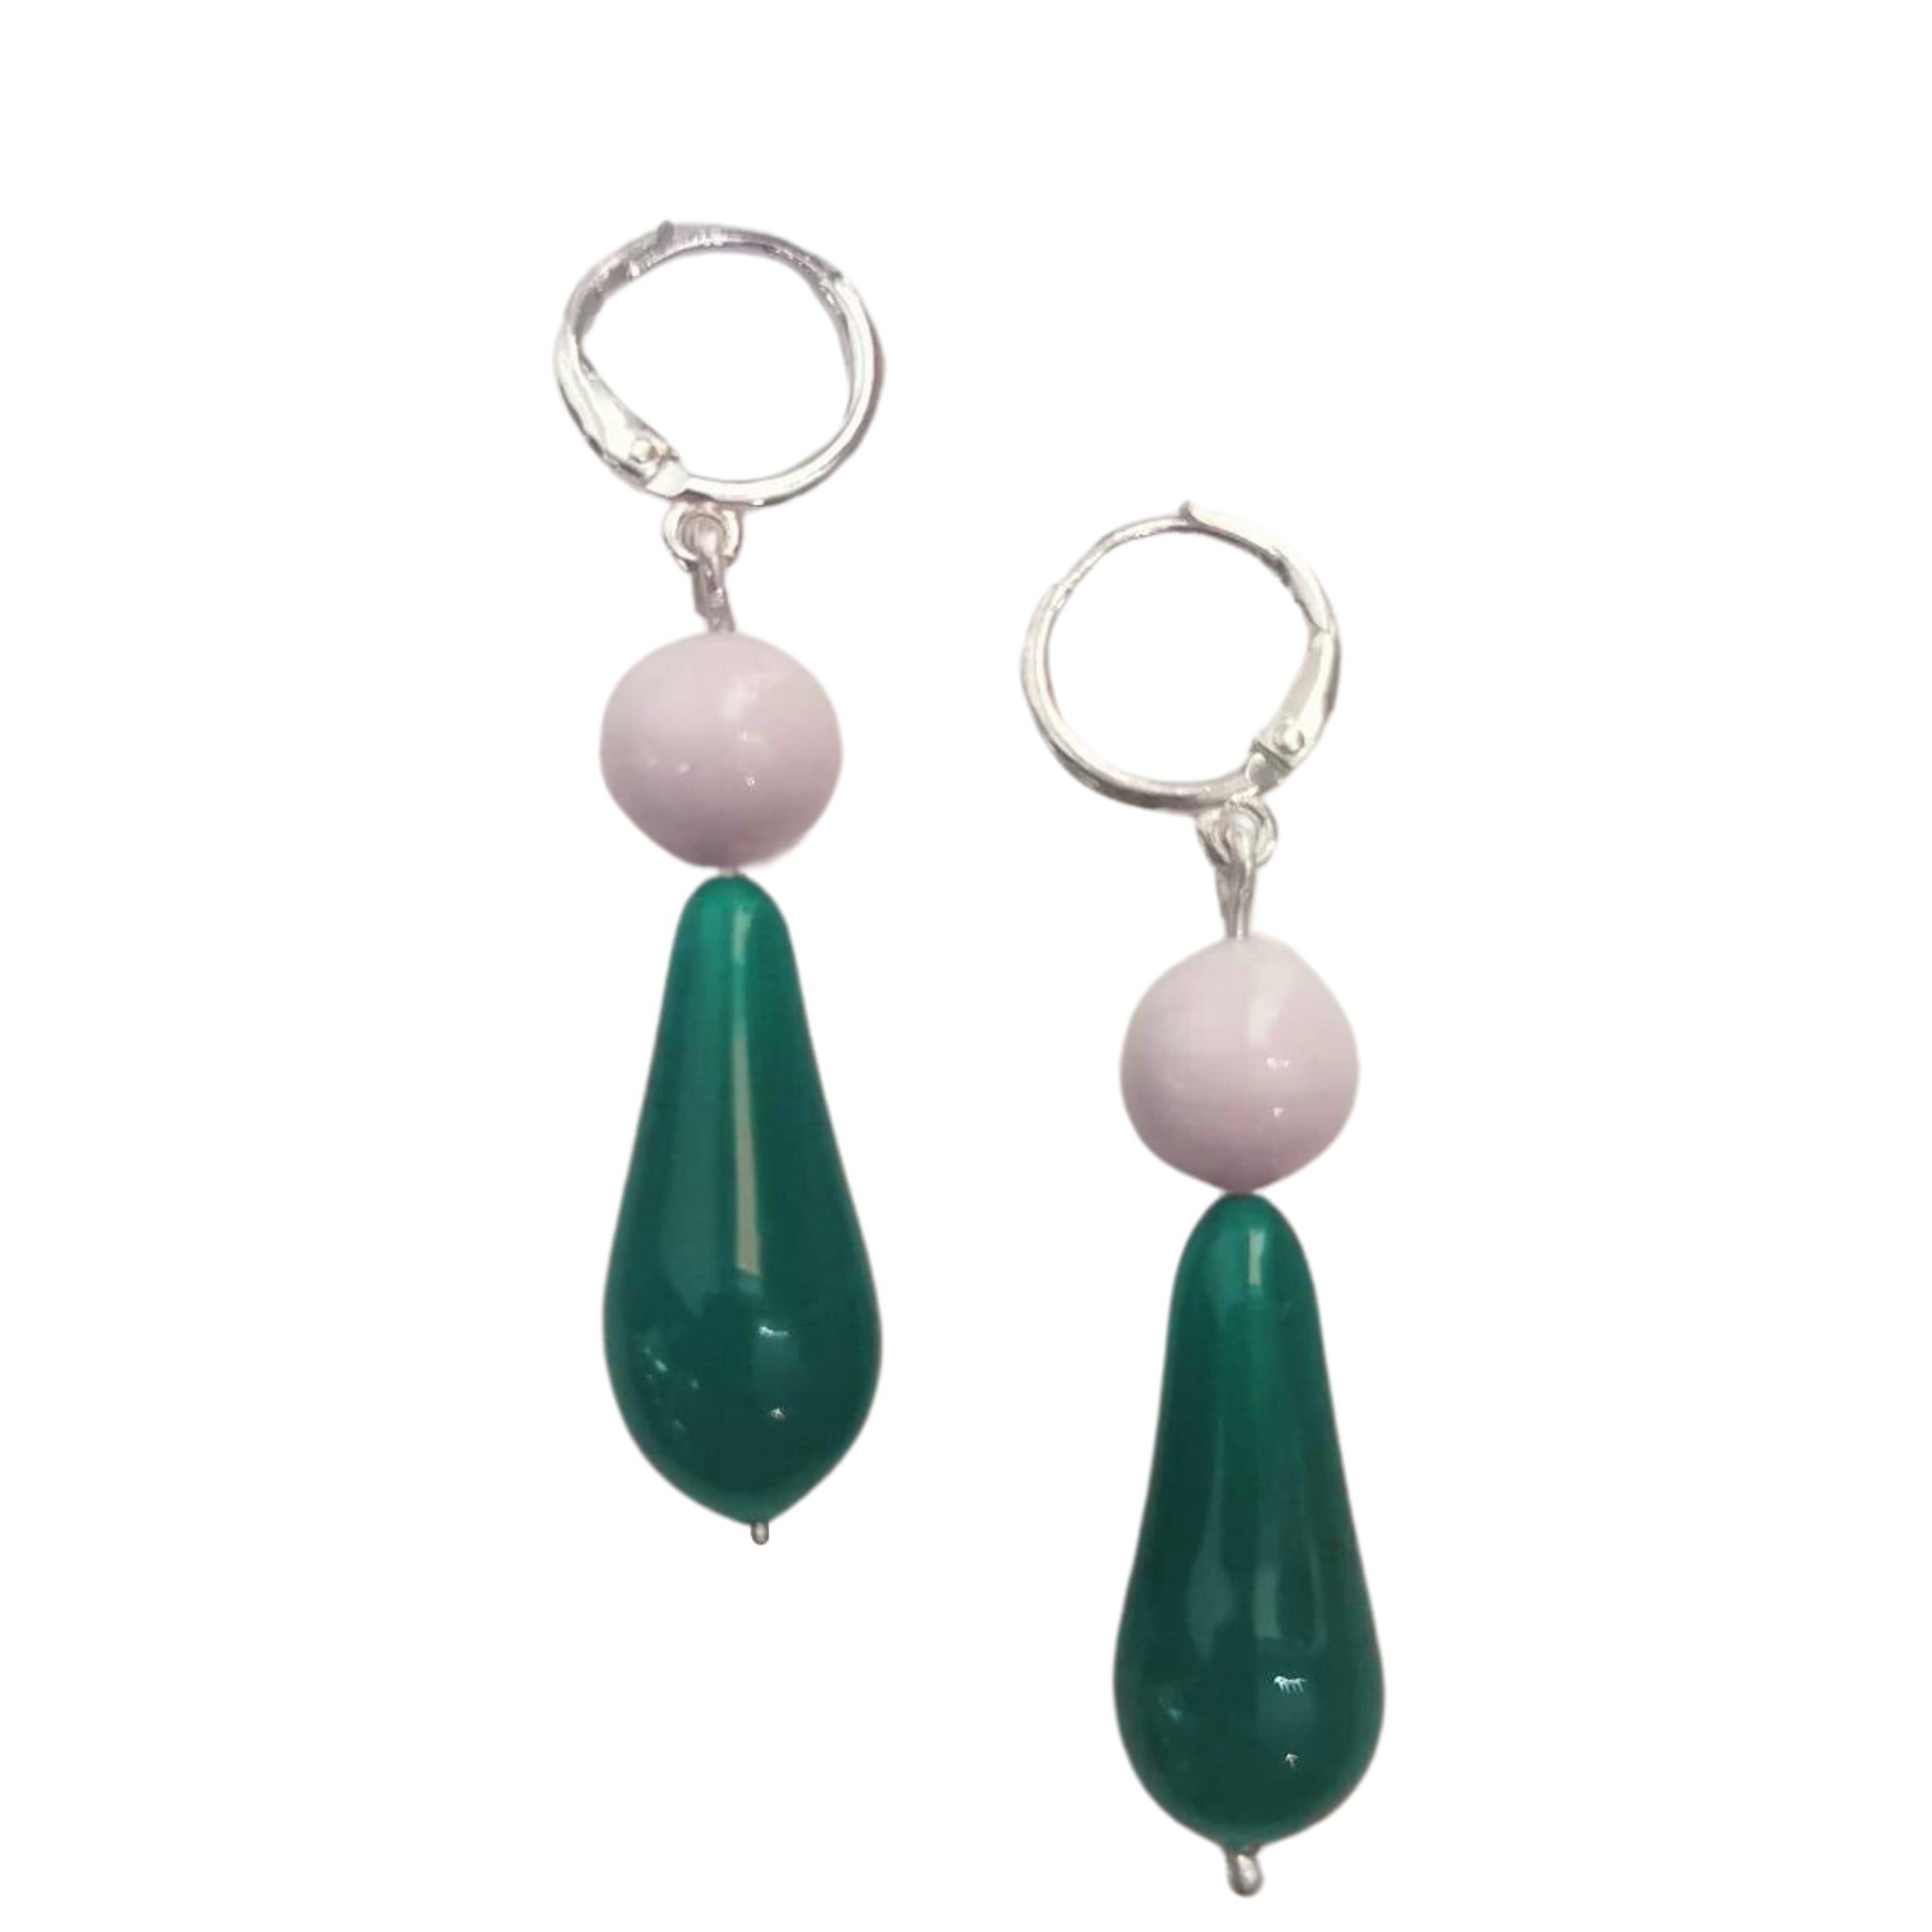 LaLa earrings, soft pink & Rainforest